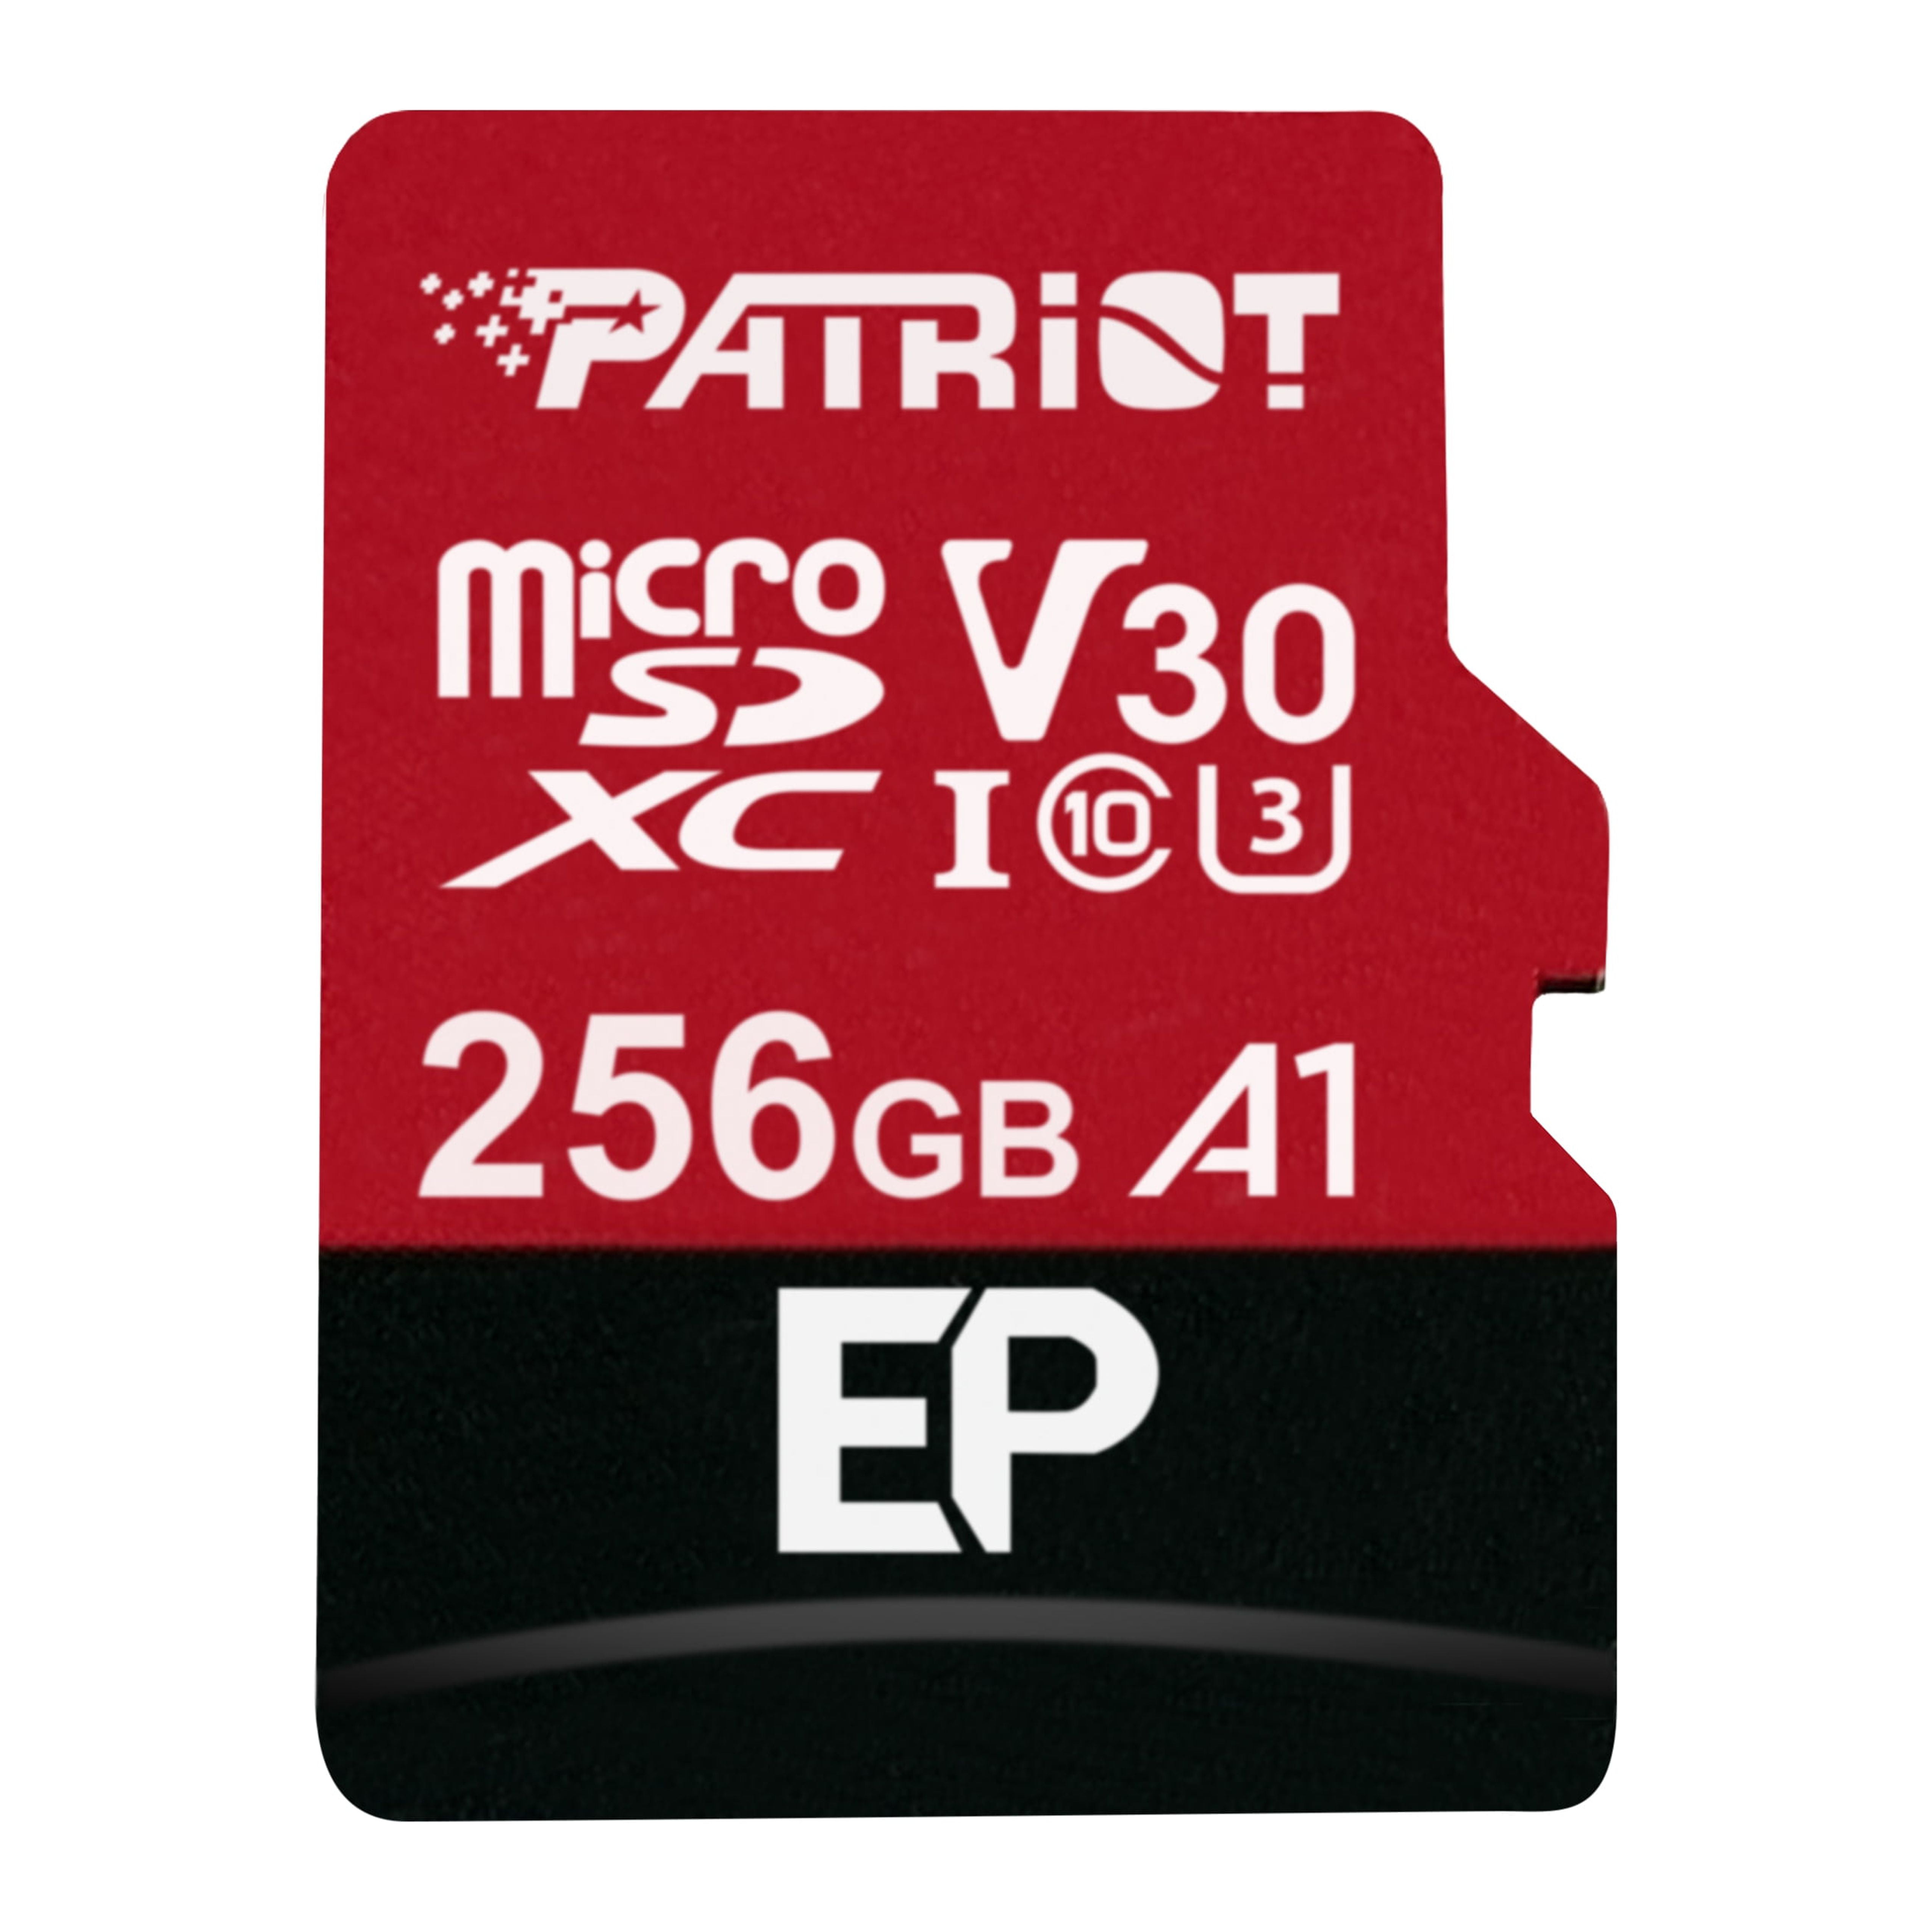 Patriot V90 SDXC USH-II U3 C10 SD Card